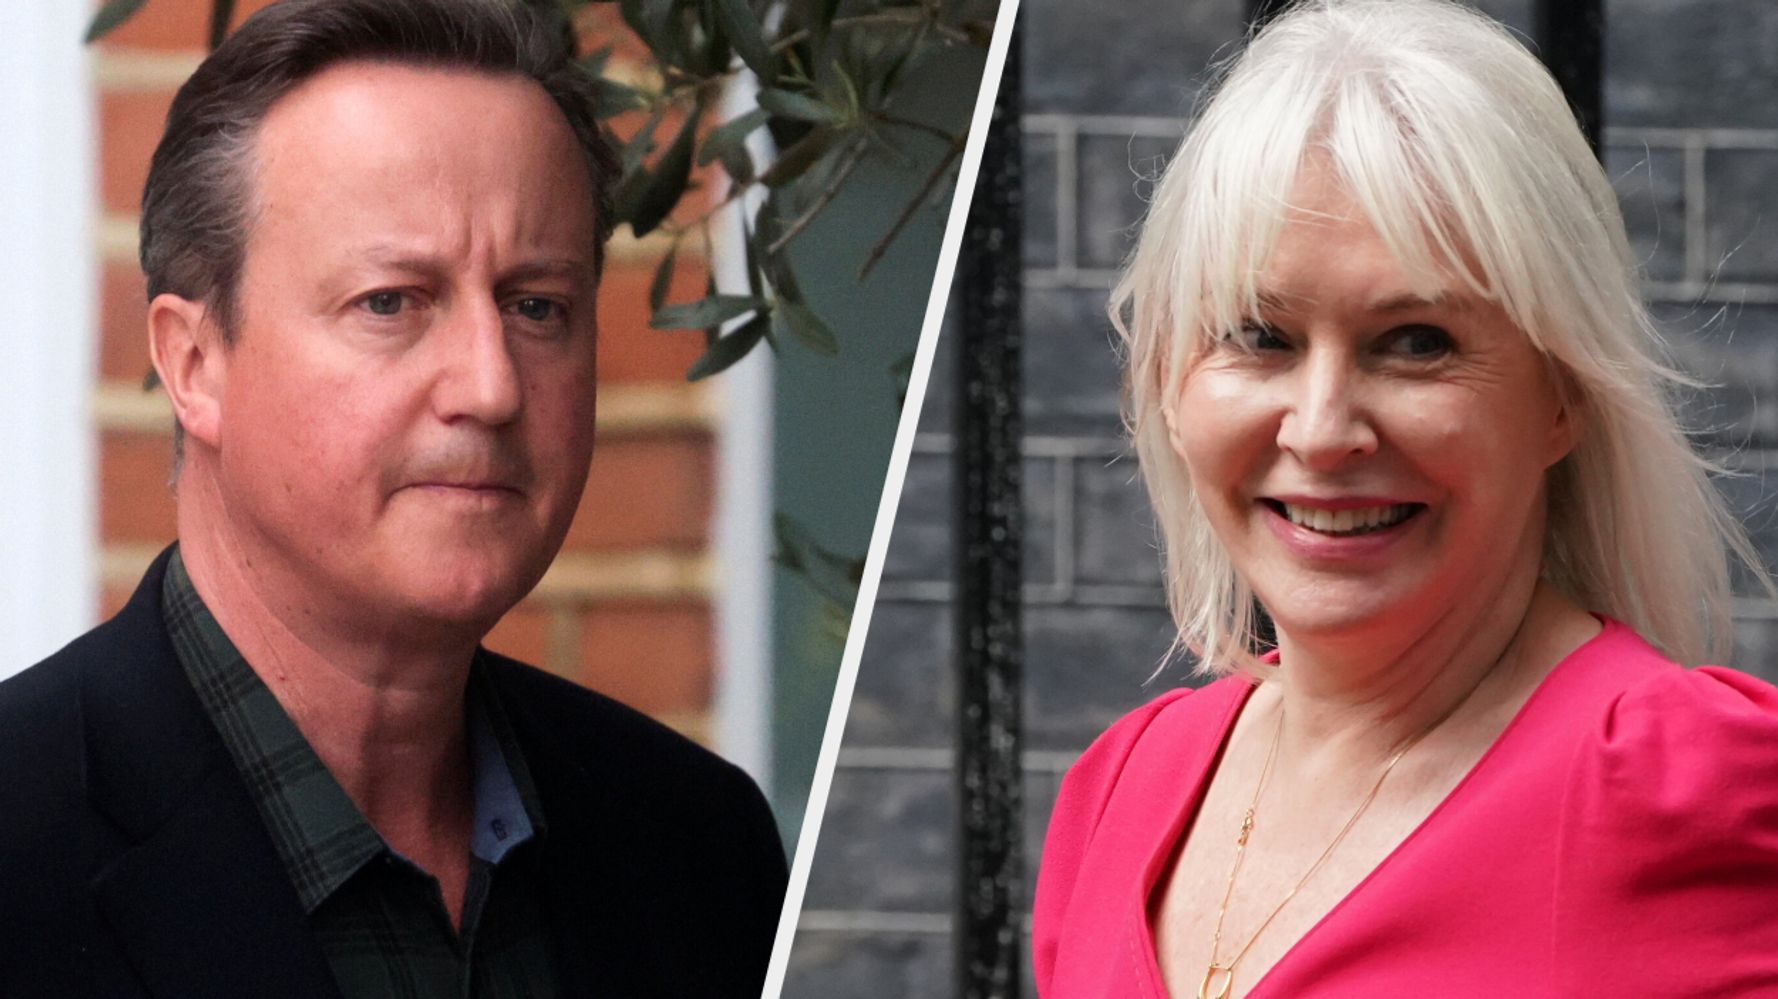 Nadine Dorries Pokes Fun At David Cameron's New Look